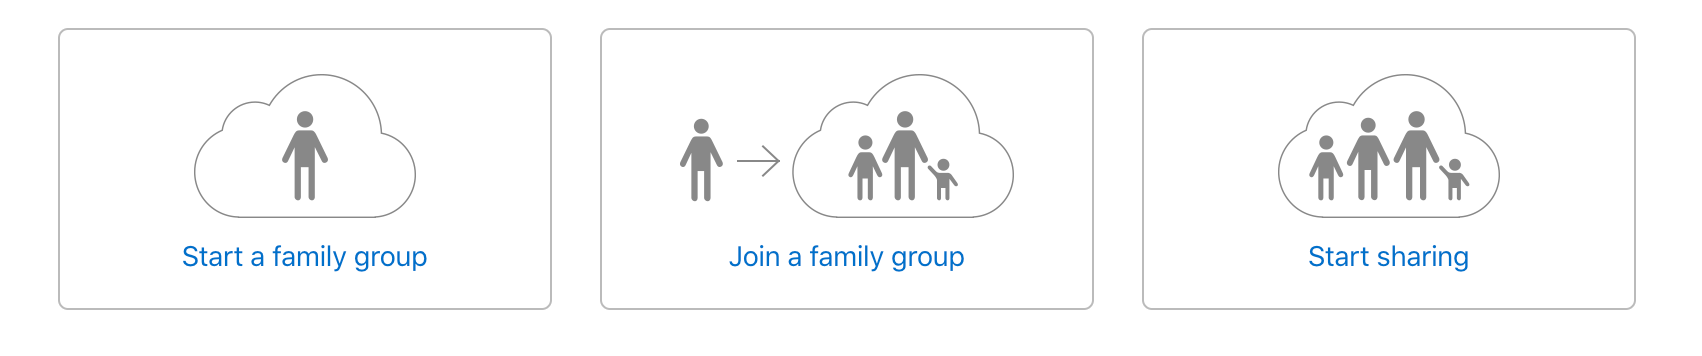 Apple permite compartir en familia